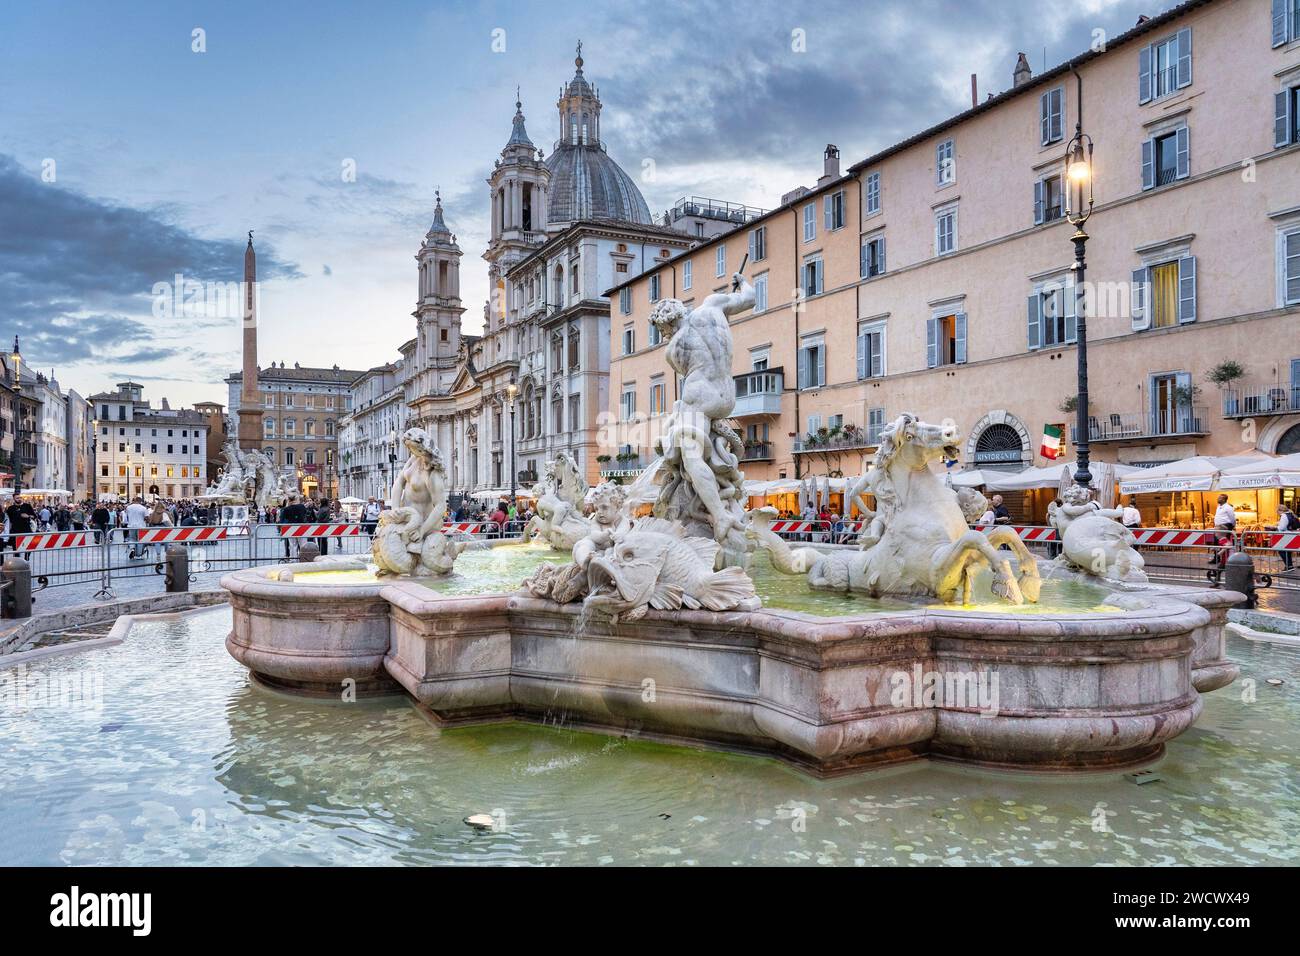 Italy, Latium, Rome, Piazza Navona, or Navona Square, Fontana del Moro, or Moor's Fountain Stock Photo